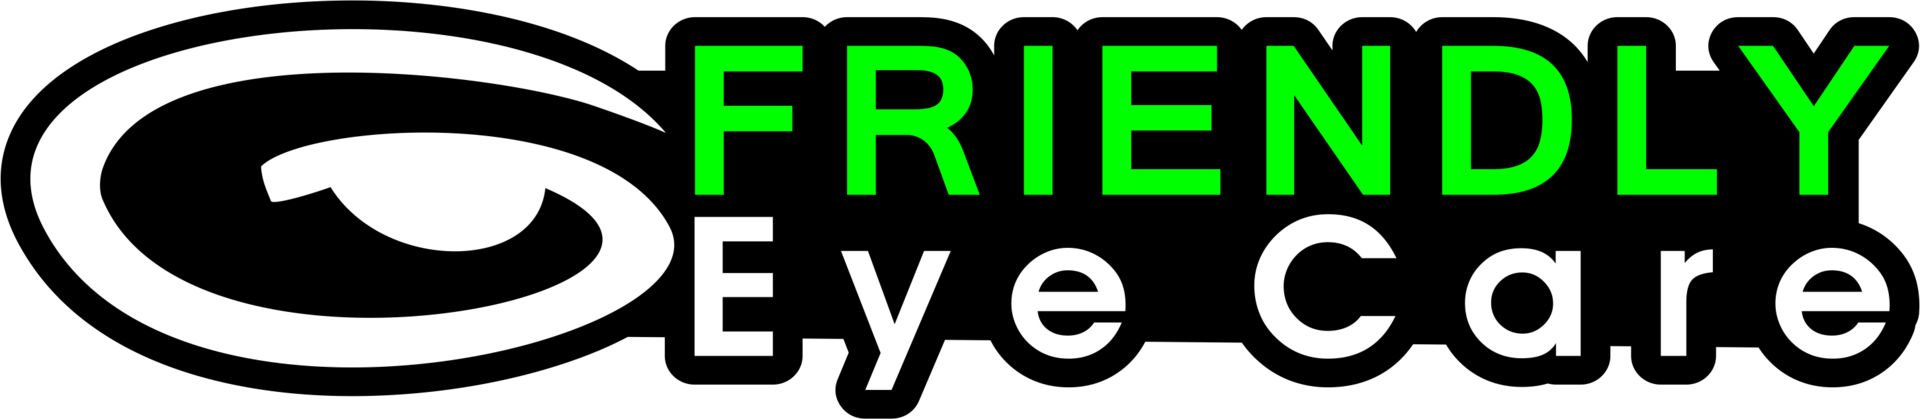 Friendly Eye Care - Logo